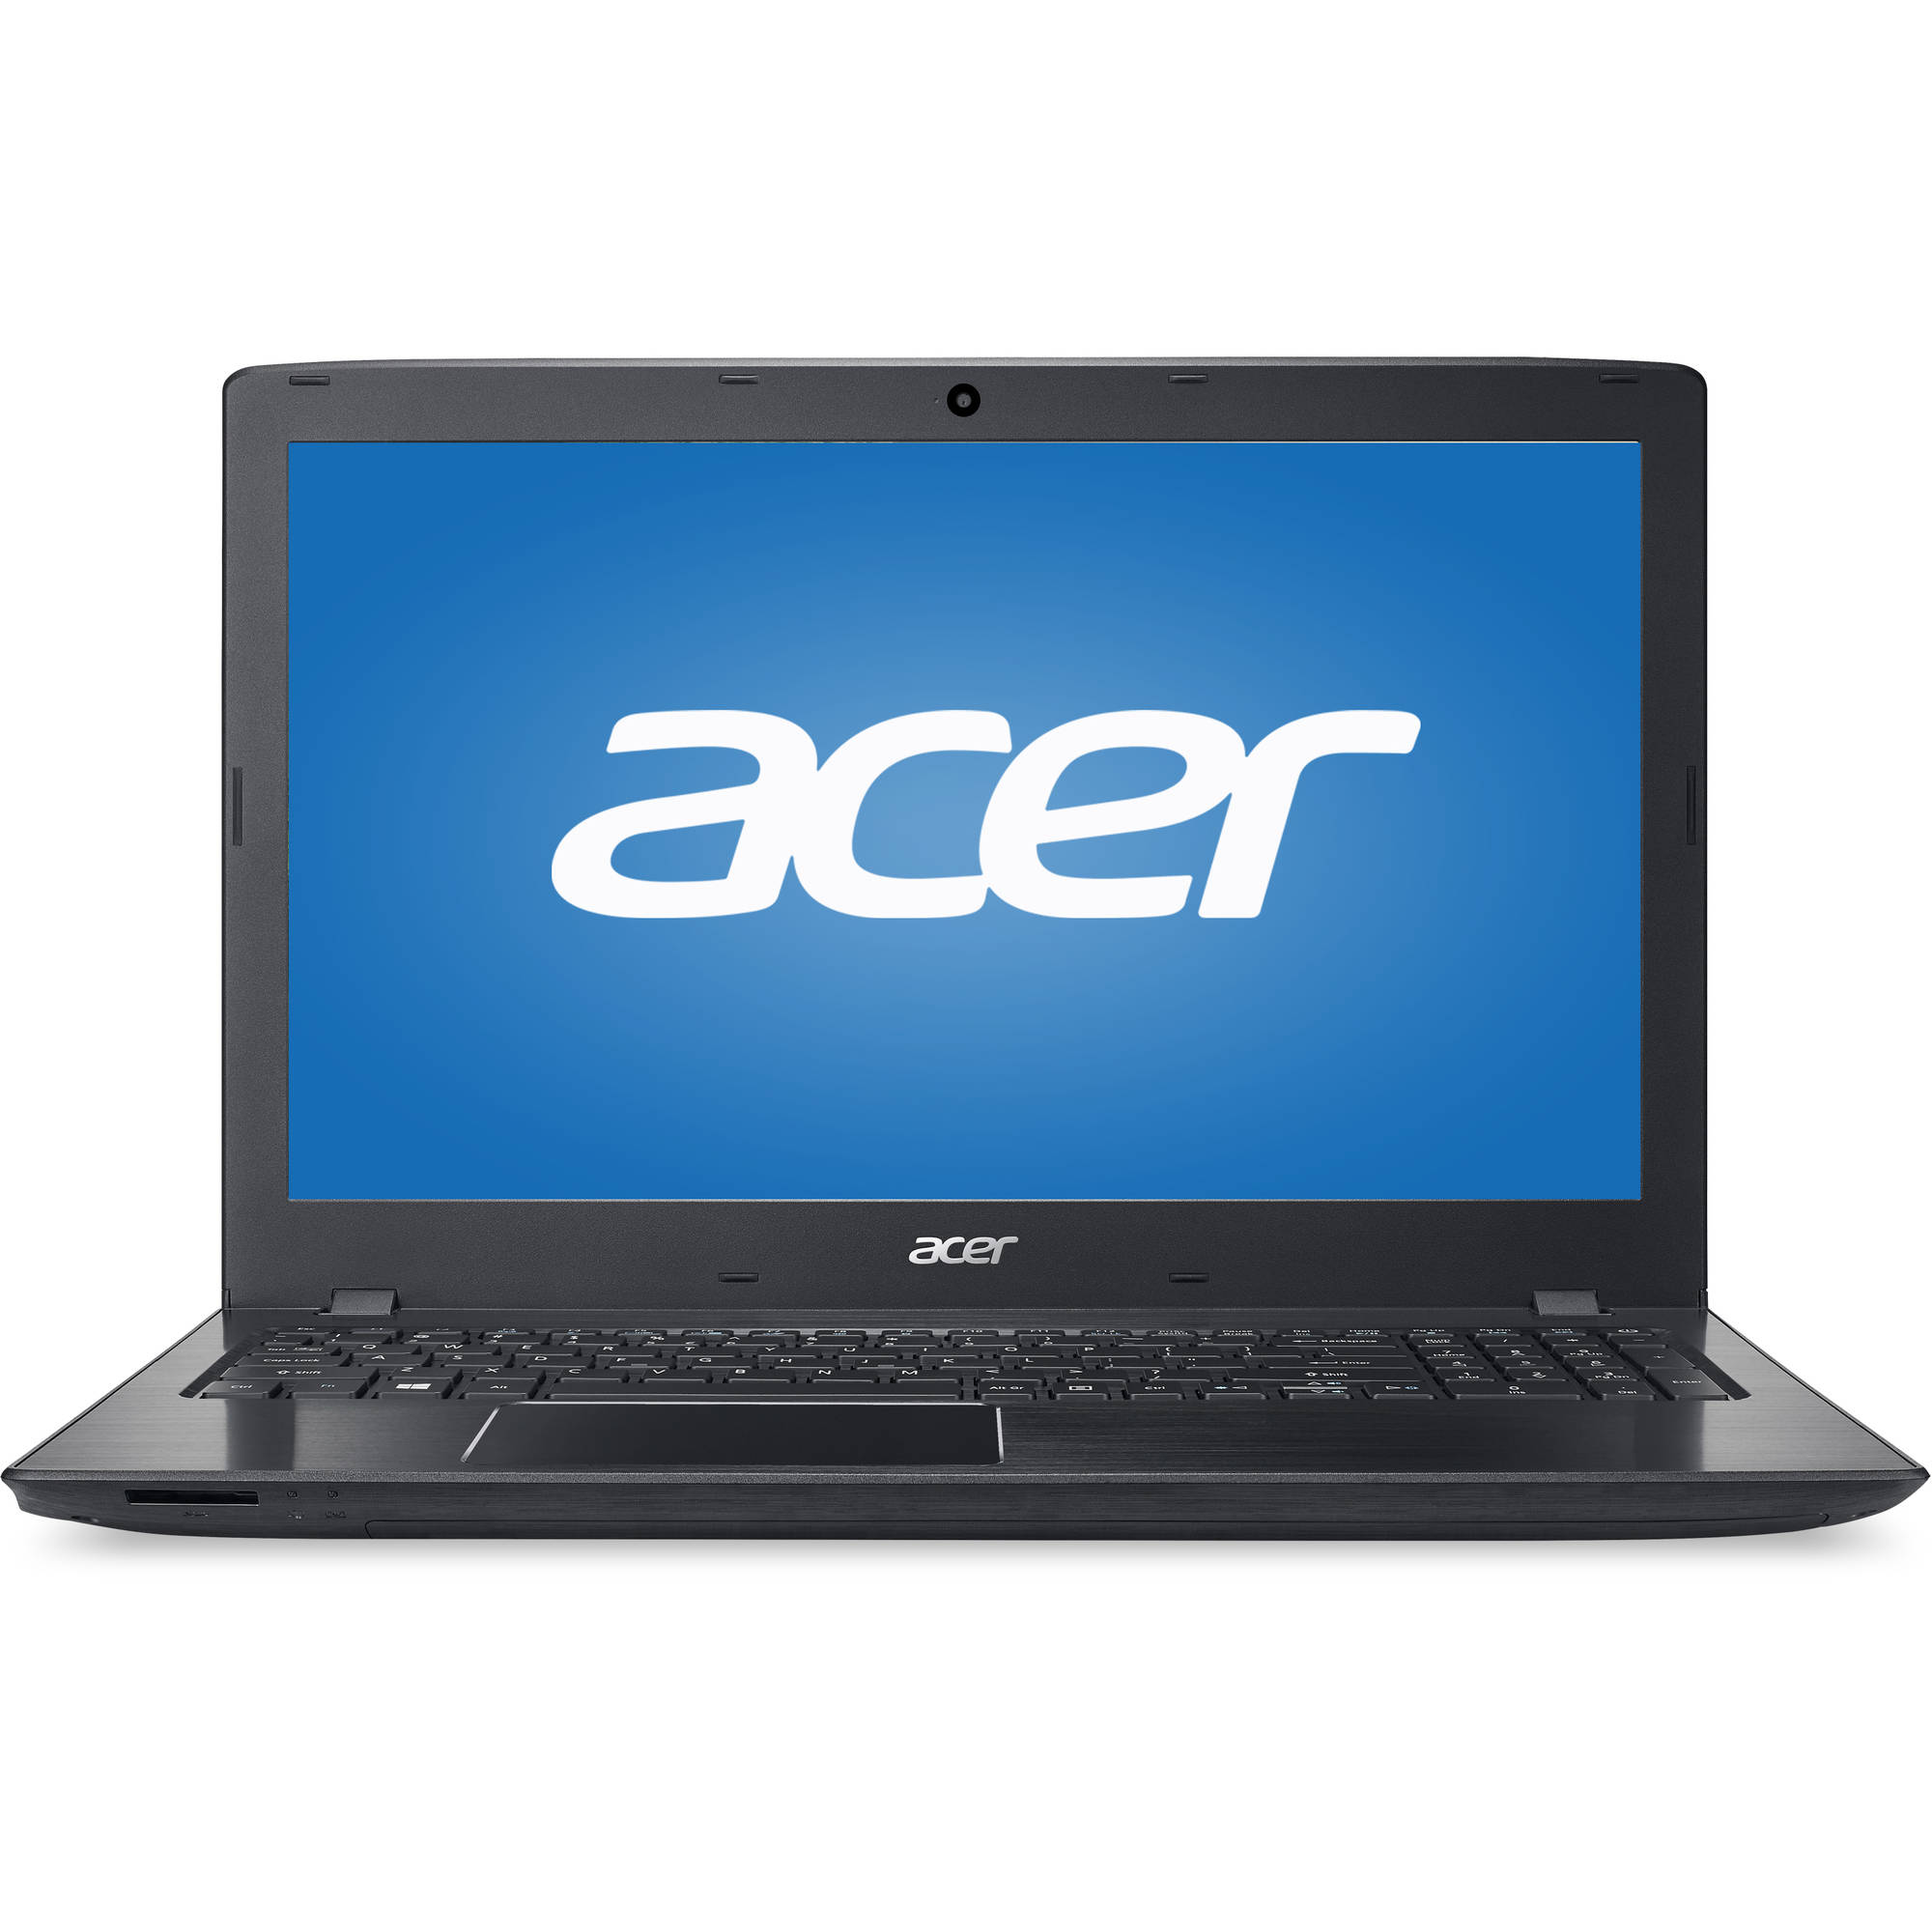 Acer Aspire E5-575-72L3 15.6" Laptop, Windows 10 Home, Intel Core i7-6500U Dual-Core Processor, 8GB Memory, 1TB Hard Drive - image 1 of 7